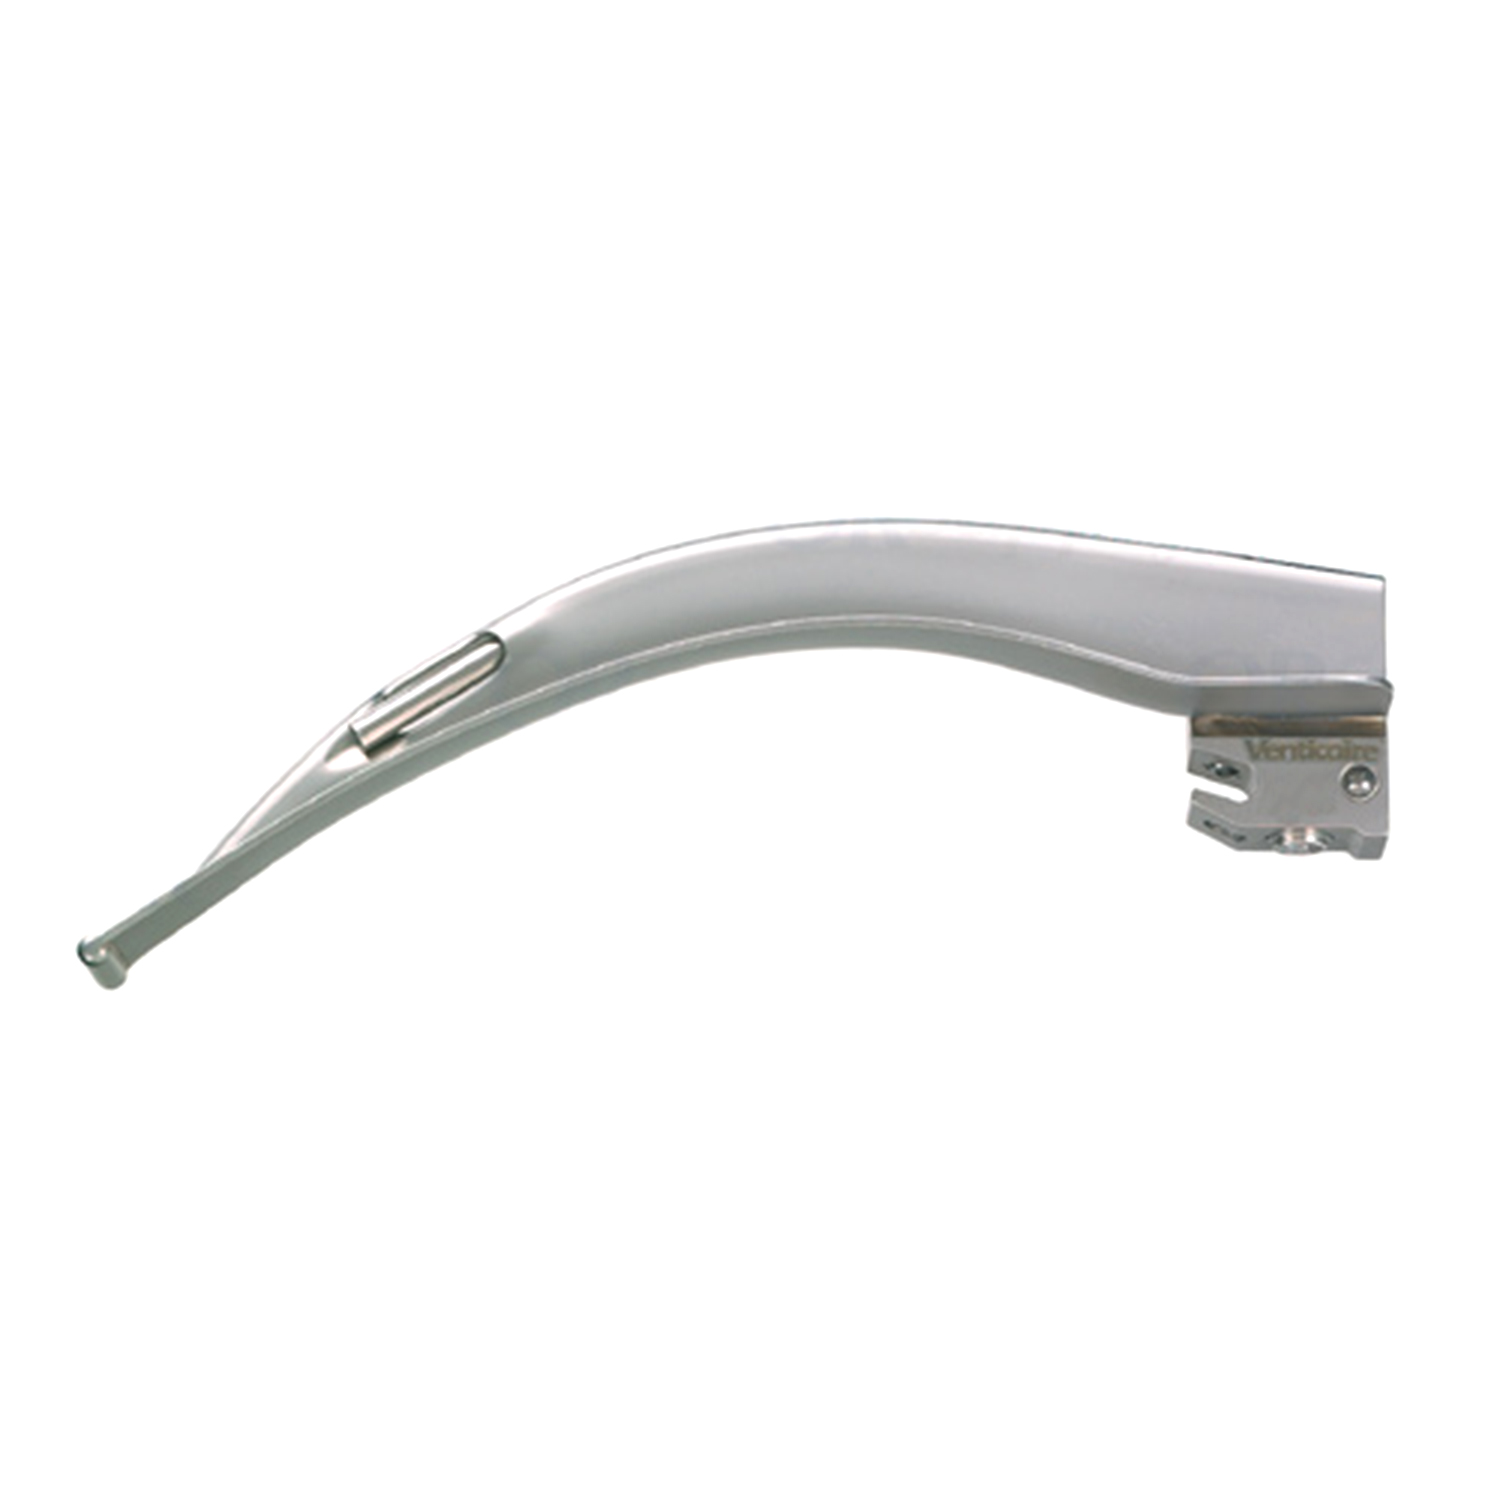 Flexicare Venticaire光纤Macintosh英语概况喉镜刀片